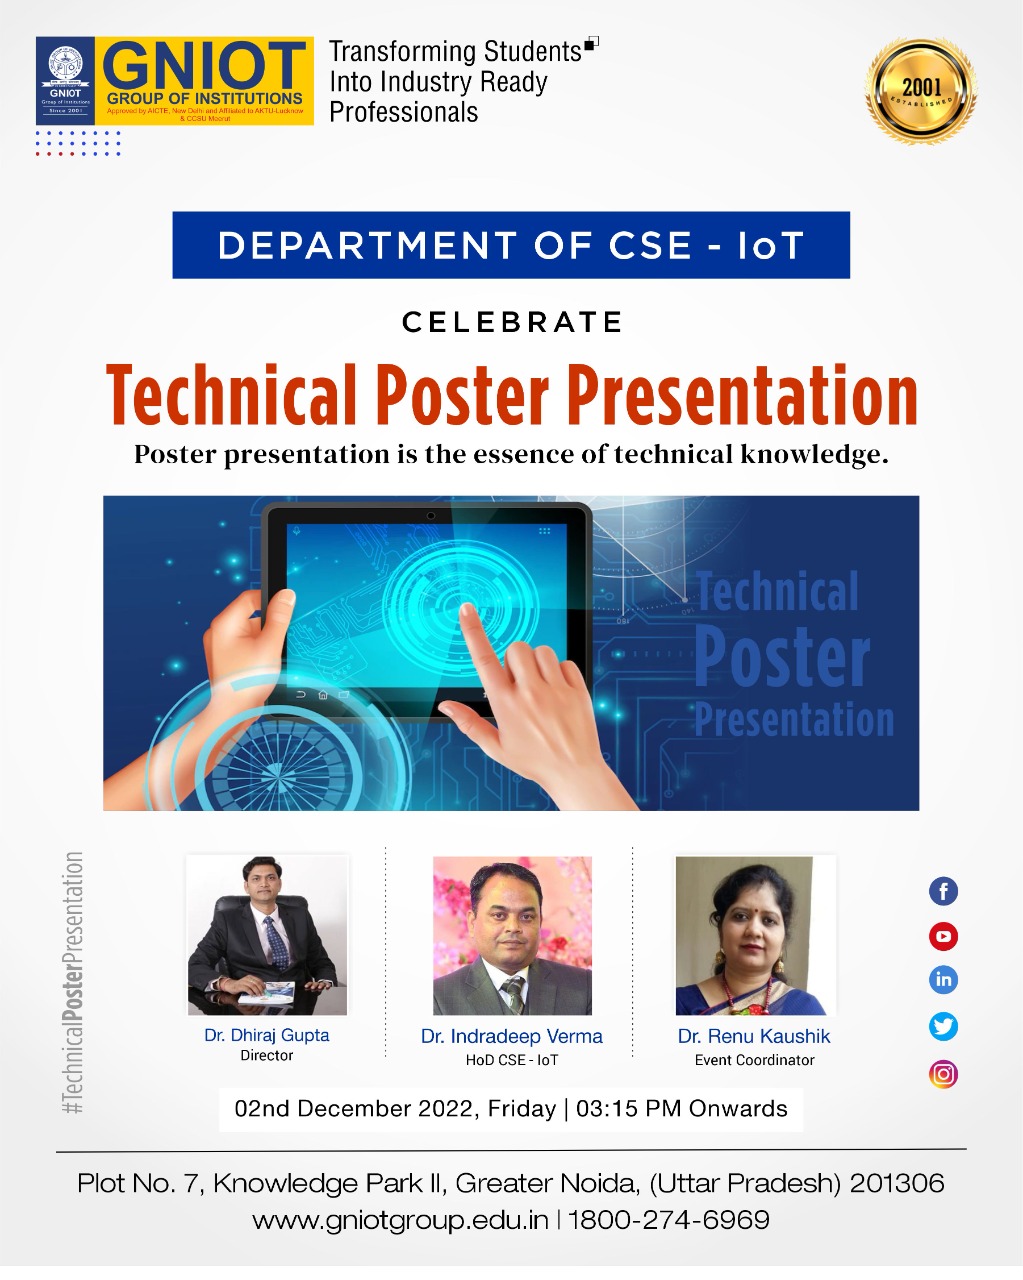 poster presentation on technical topics